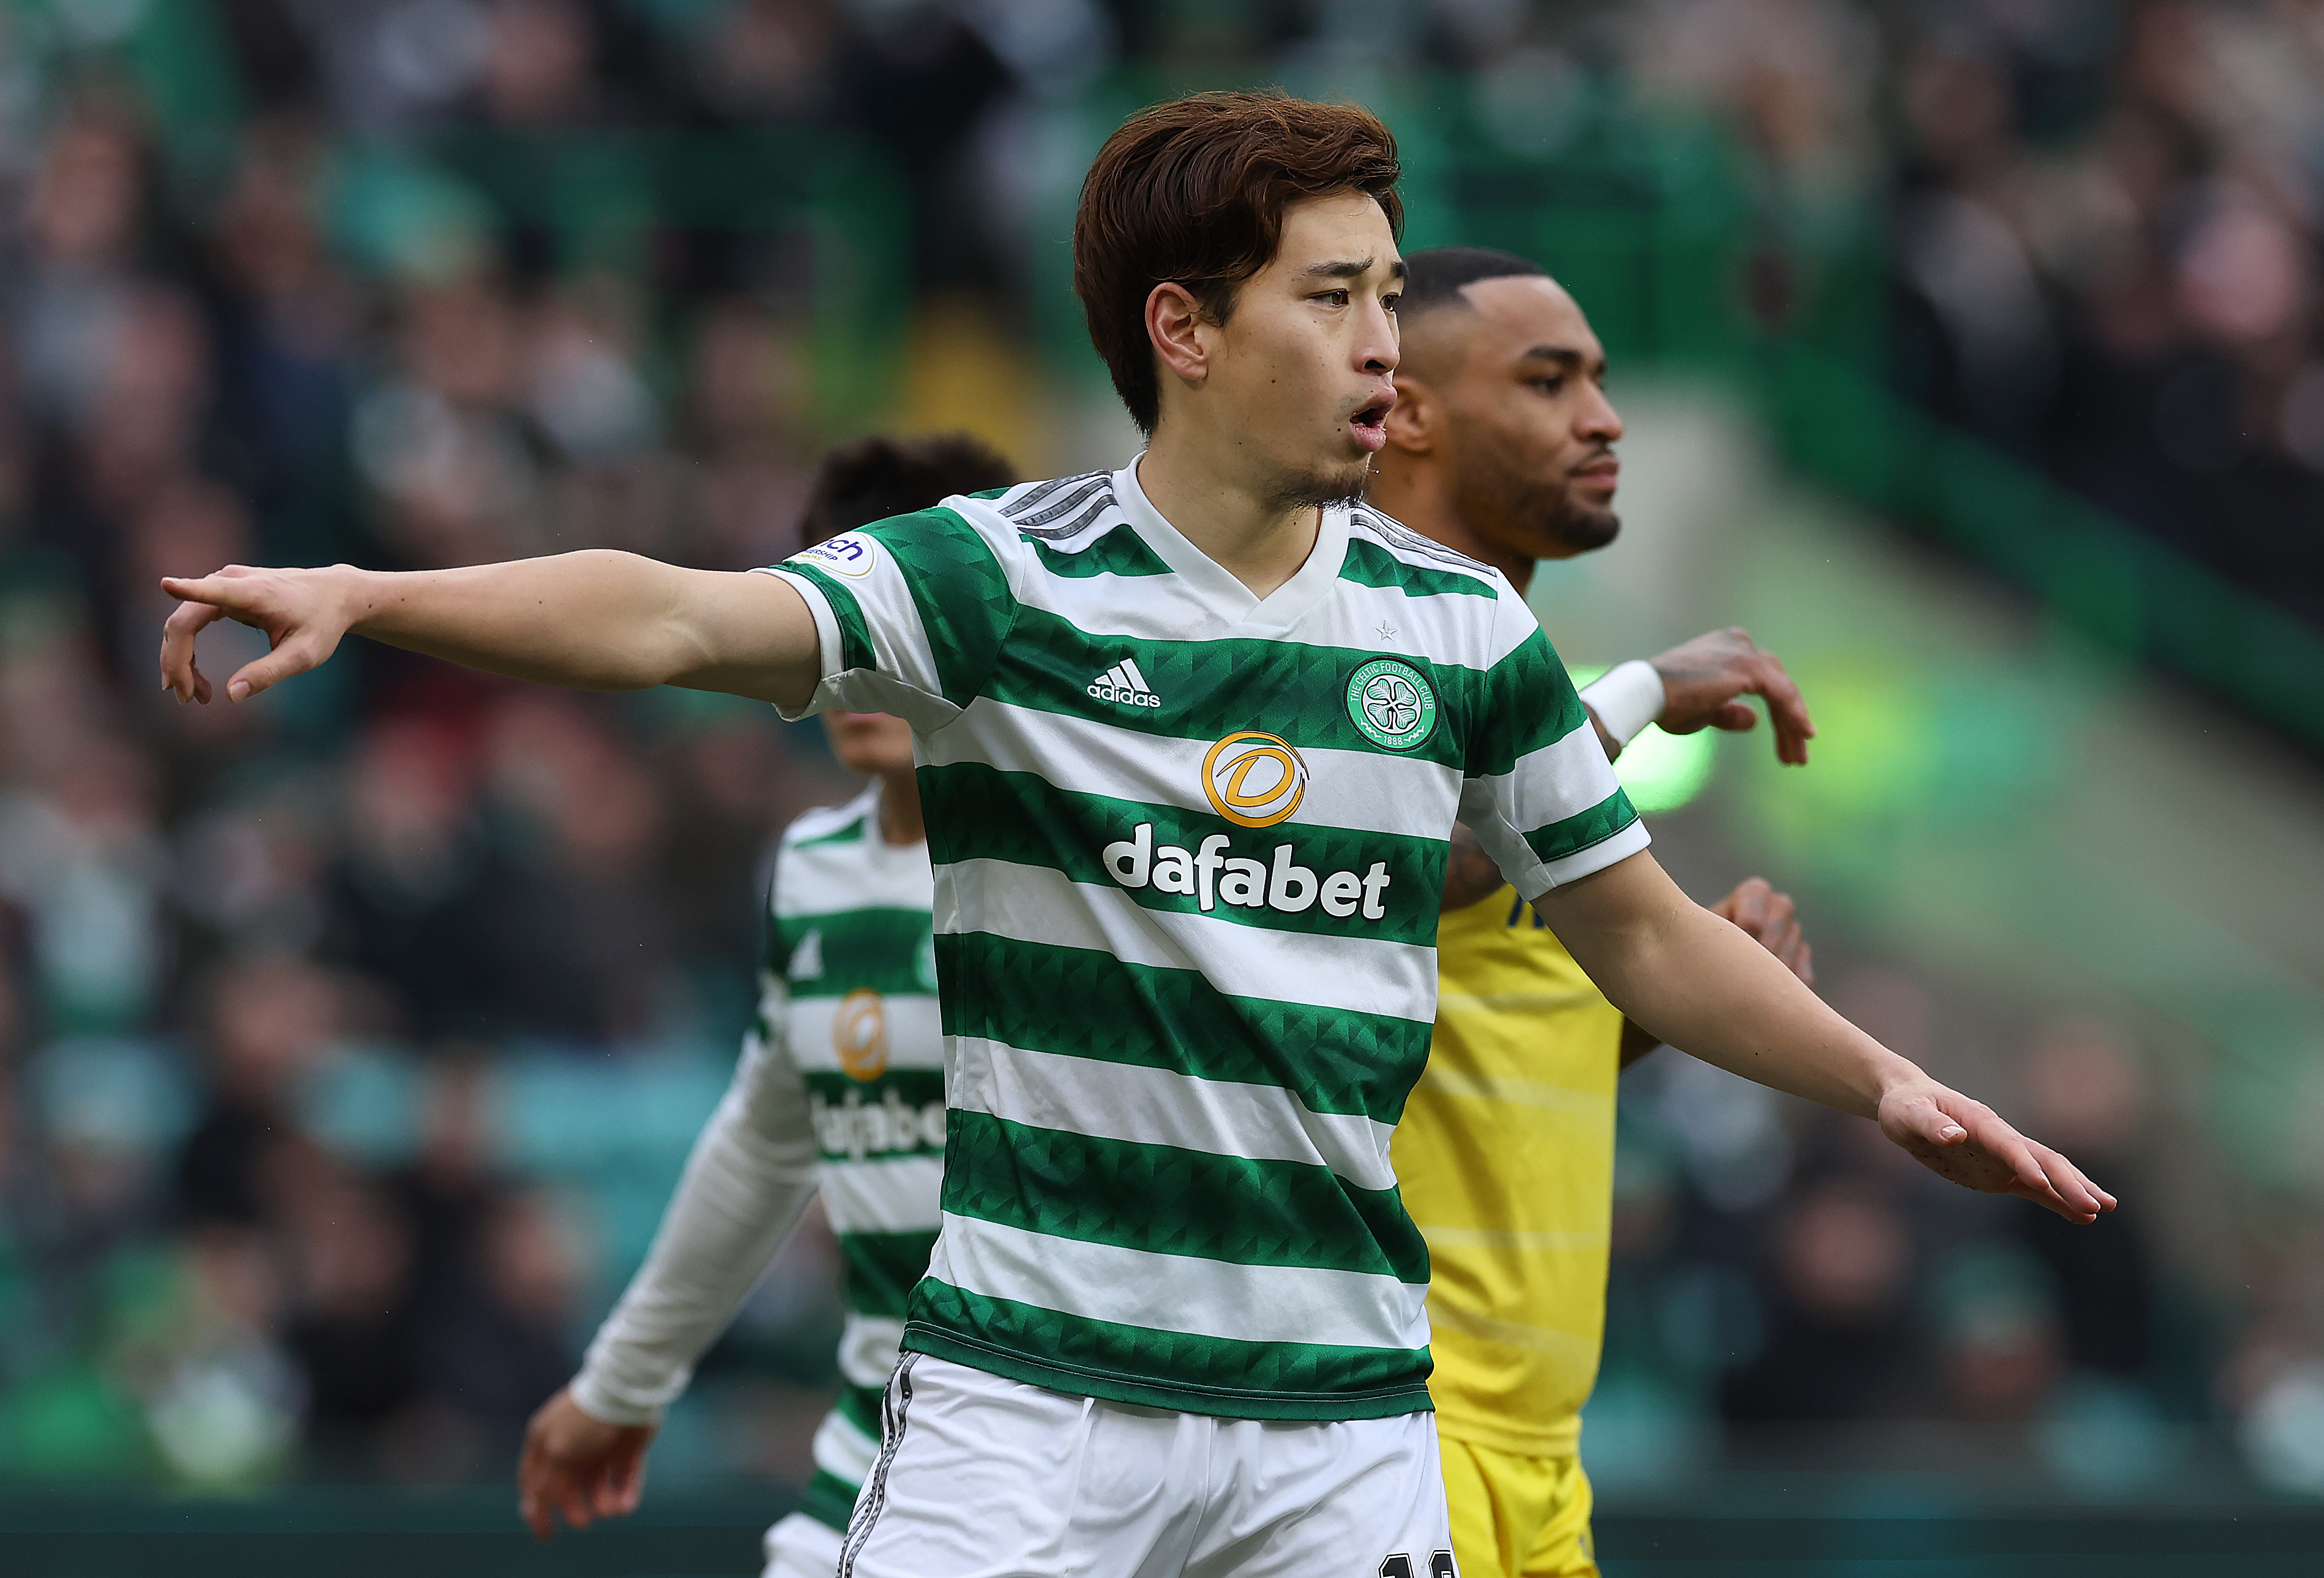 Hearts v Celtic Predicted XI with Kobayashi and Ralston to start